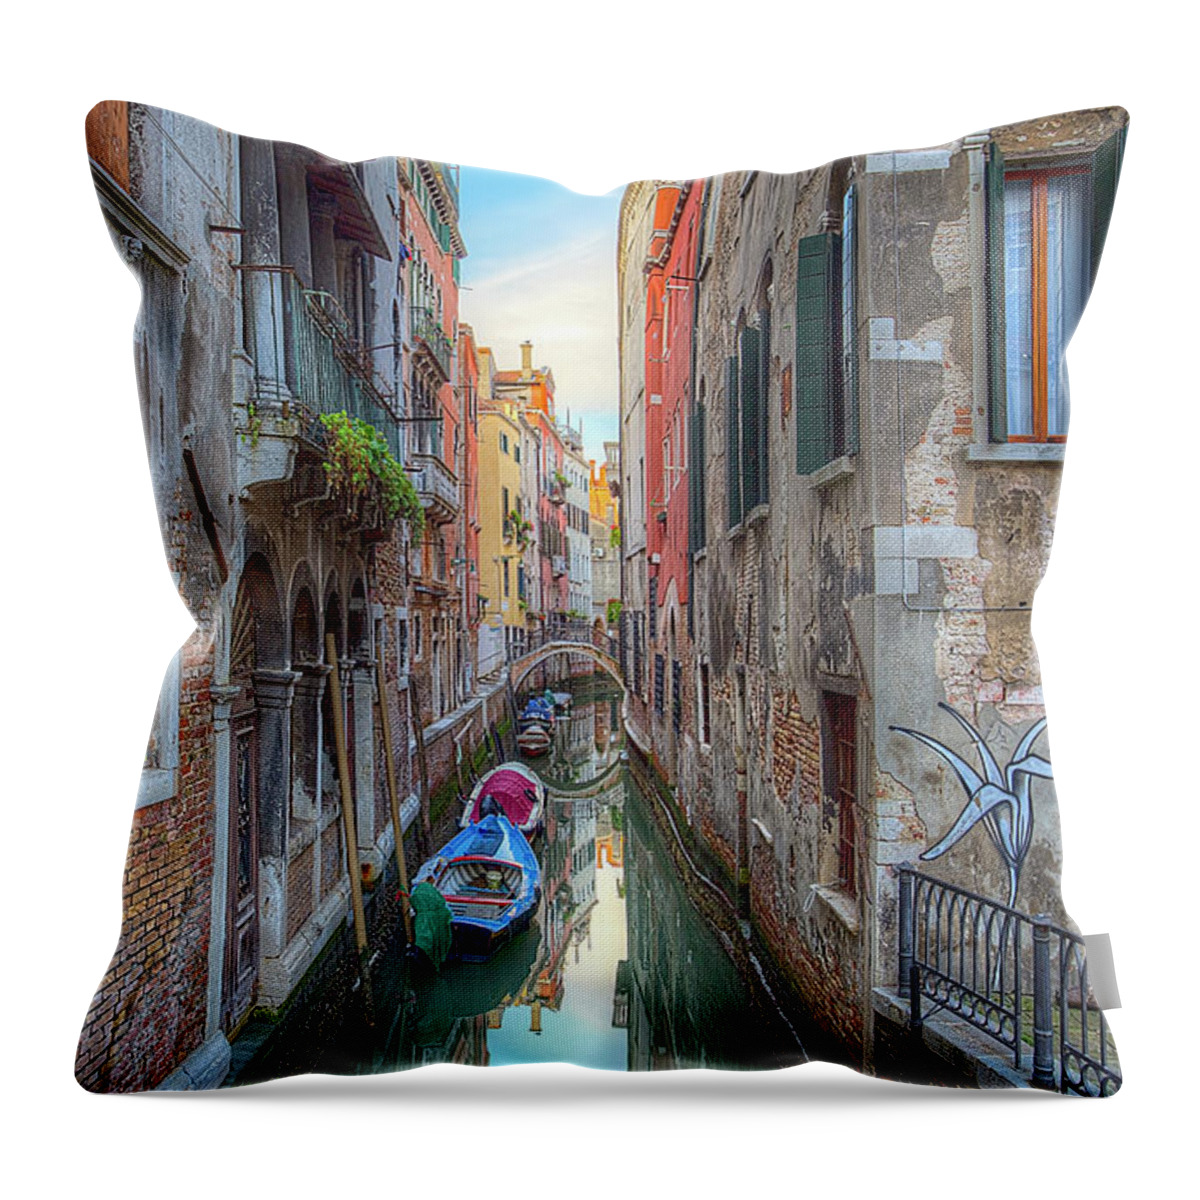 Venice Throw Pillow featuring the photograph Venusian Textures by Peter Kennett